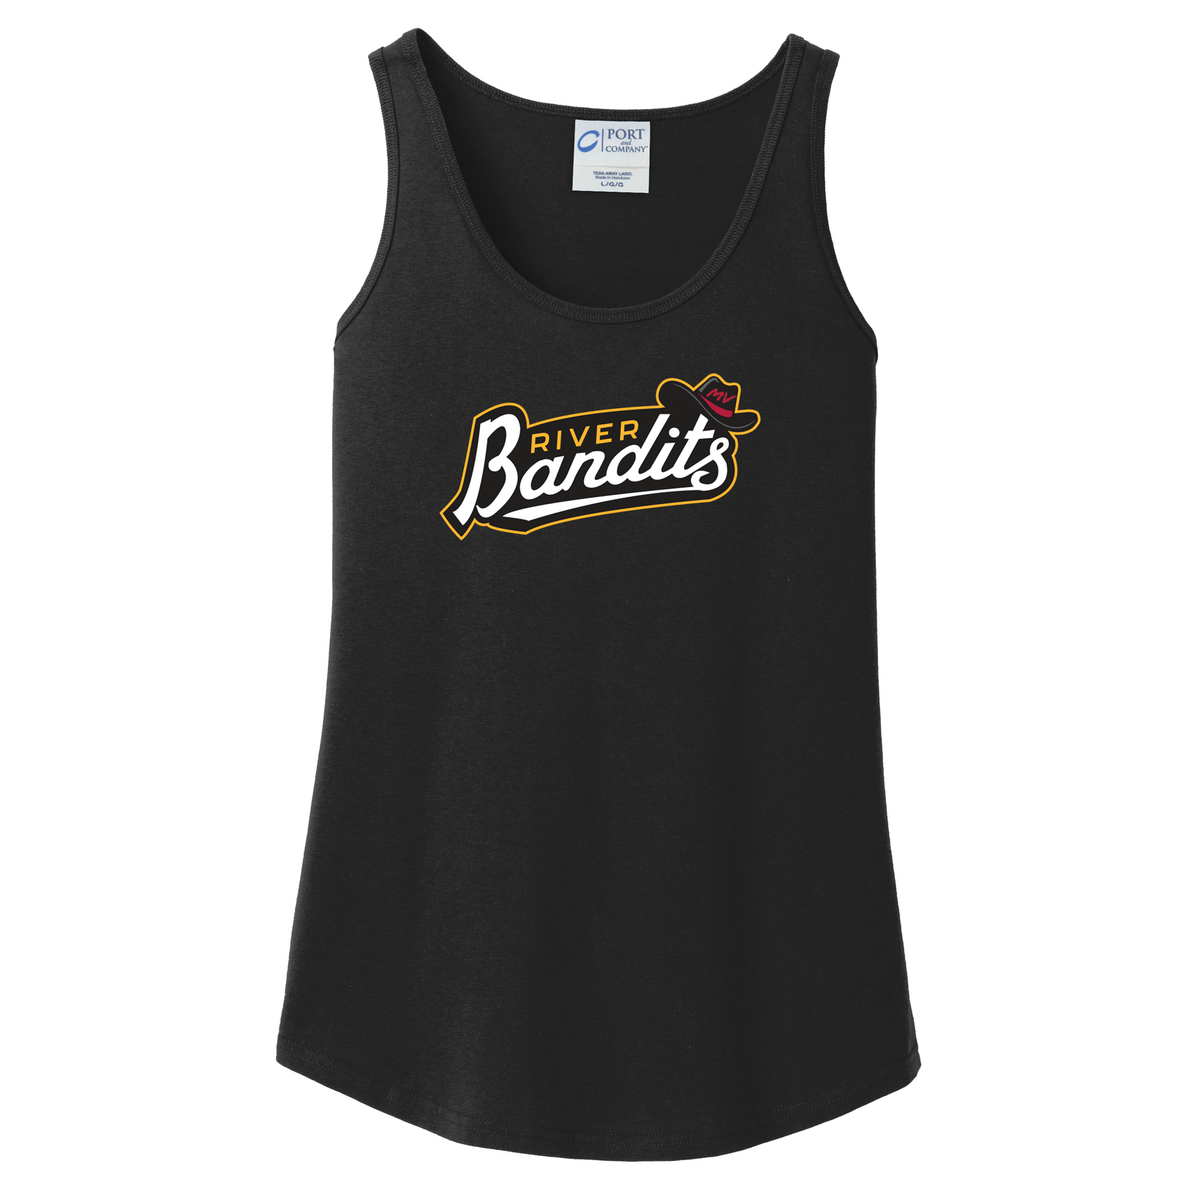 River Bandits Baseball Women's Tank Top